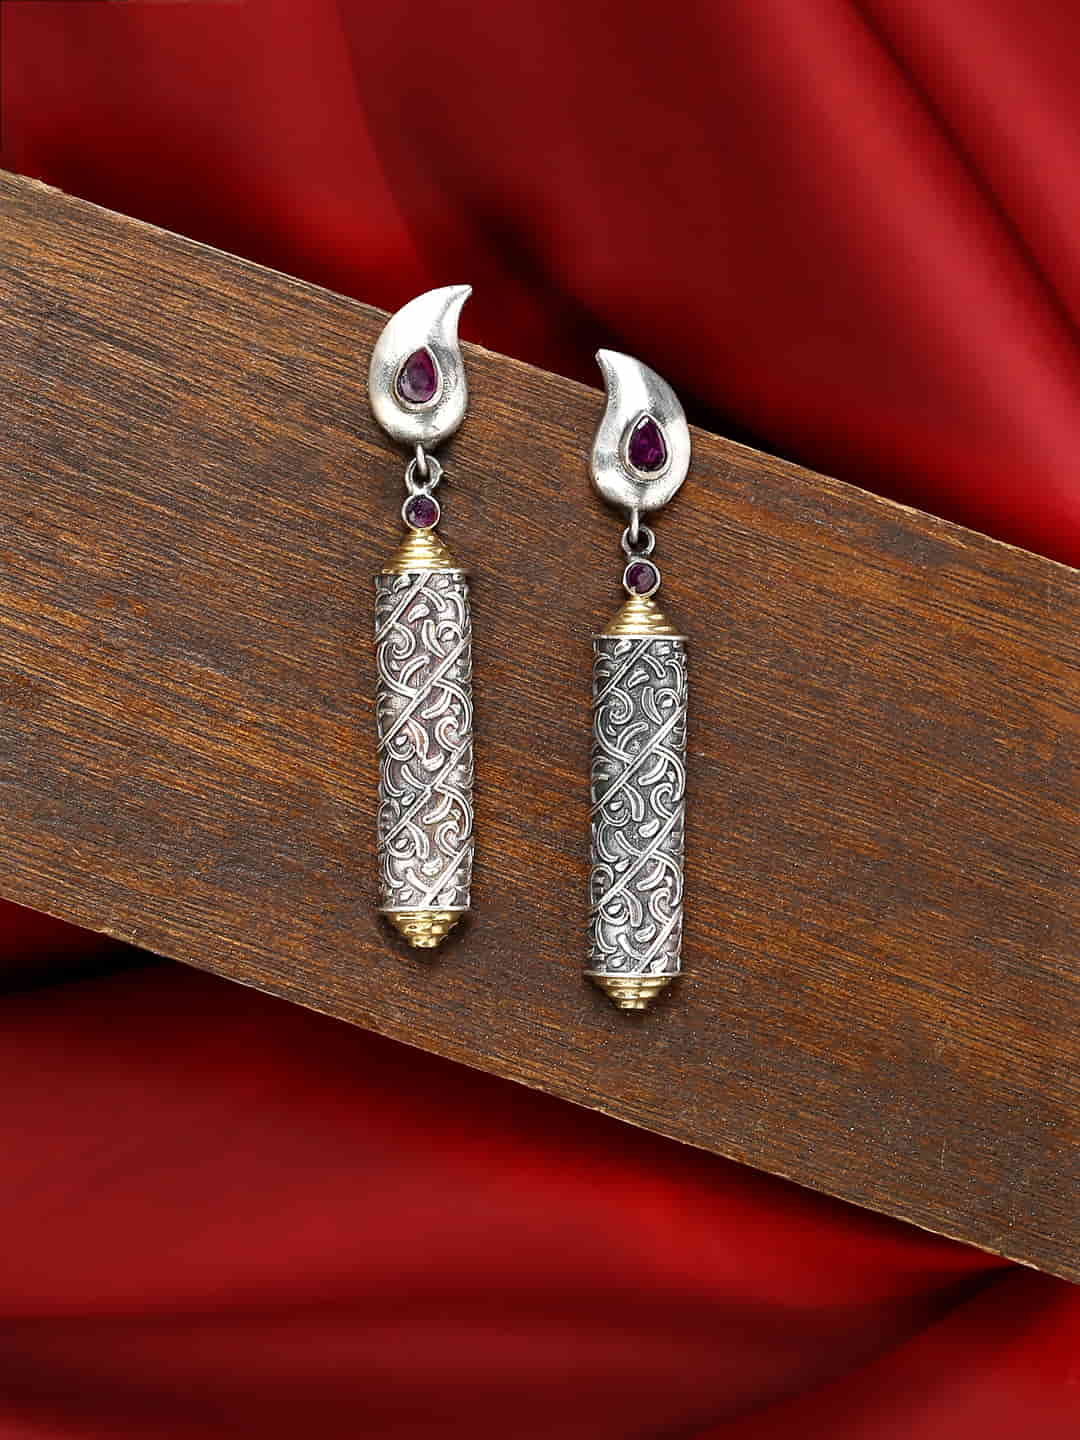 dual-tone-leaf-shape-dangle-earrings-with-pink-stone-viraasi